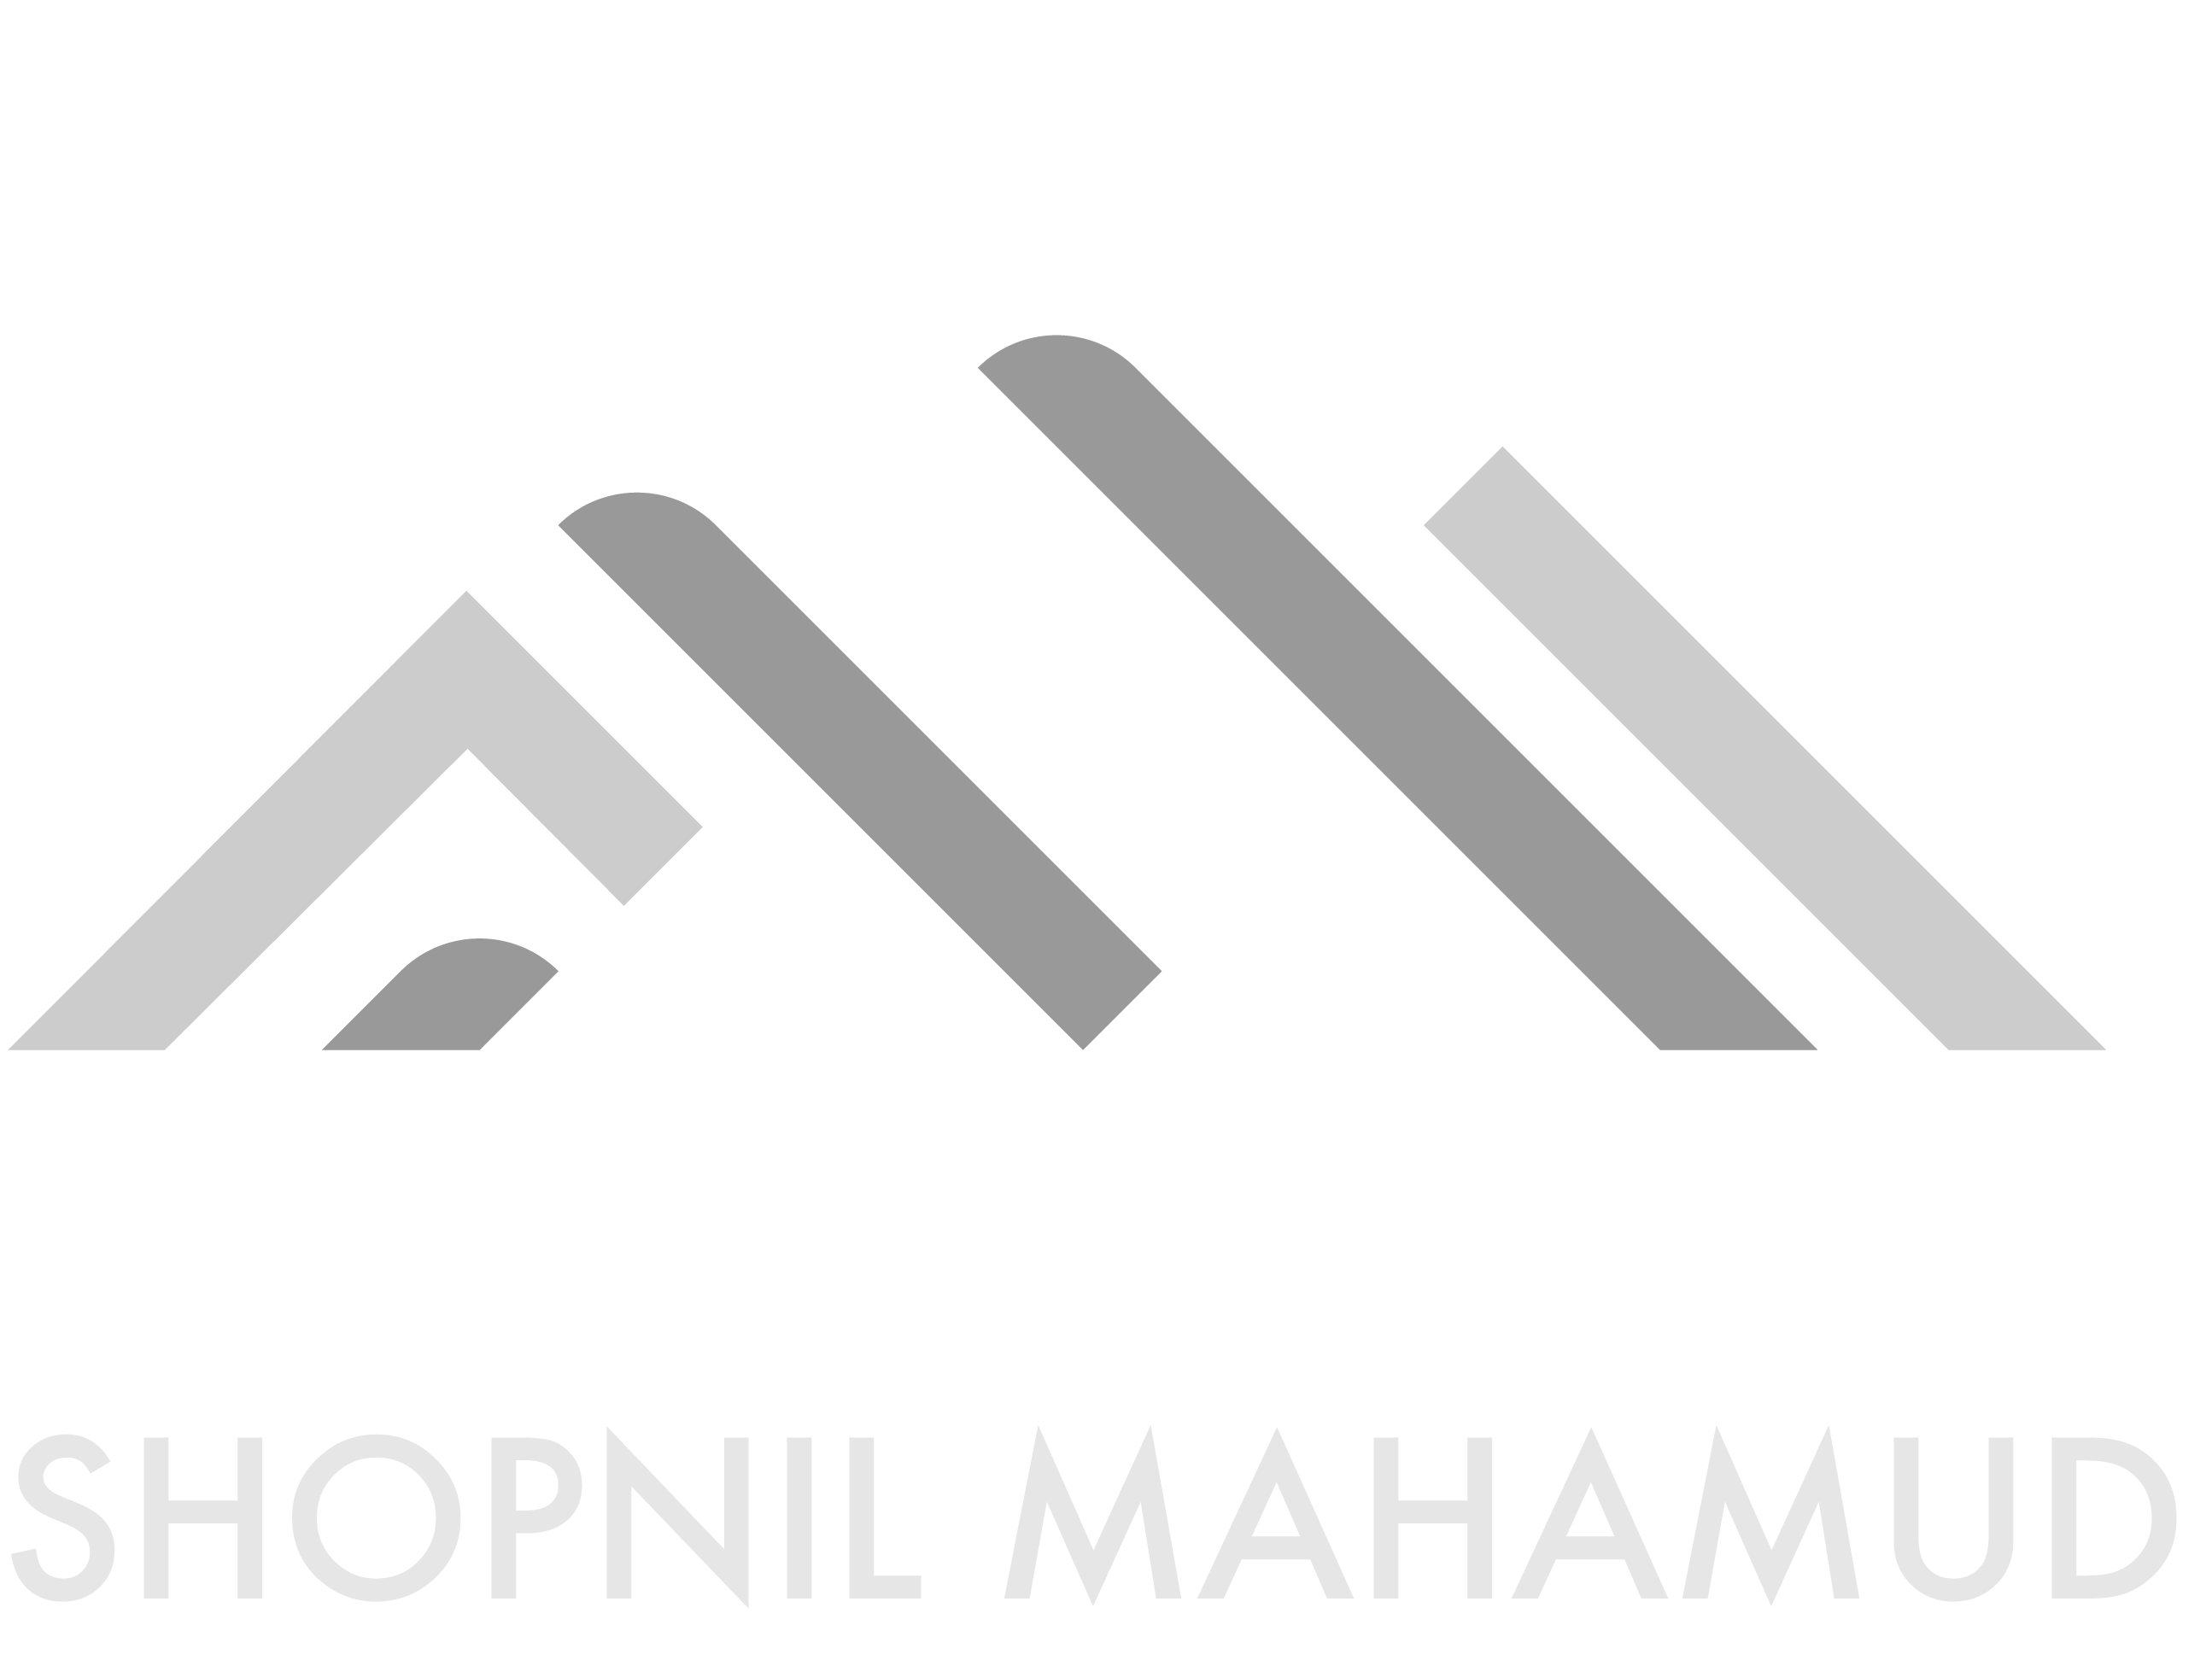 Shopnil Mahmud